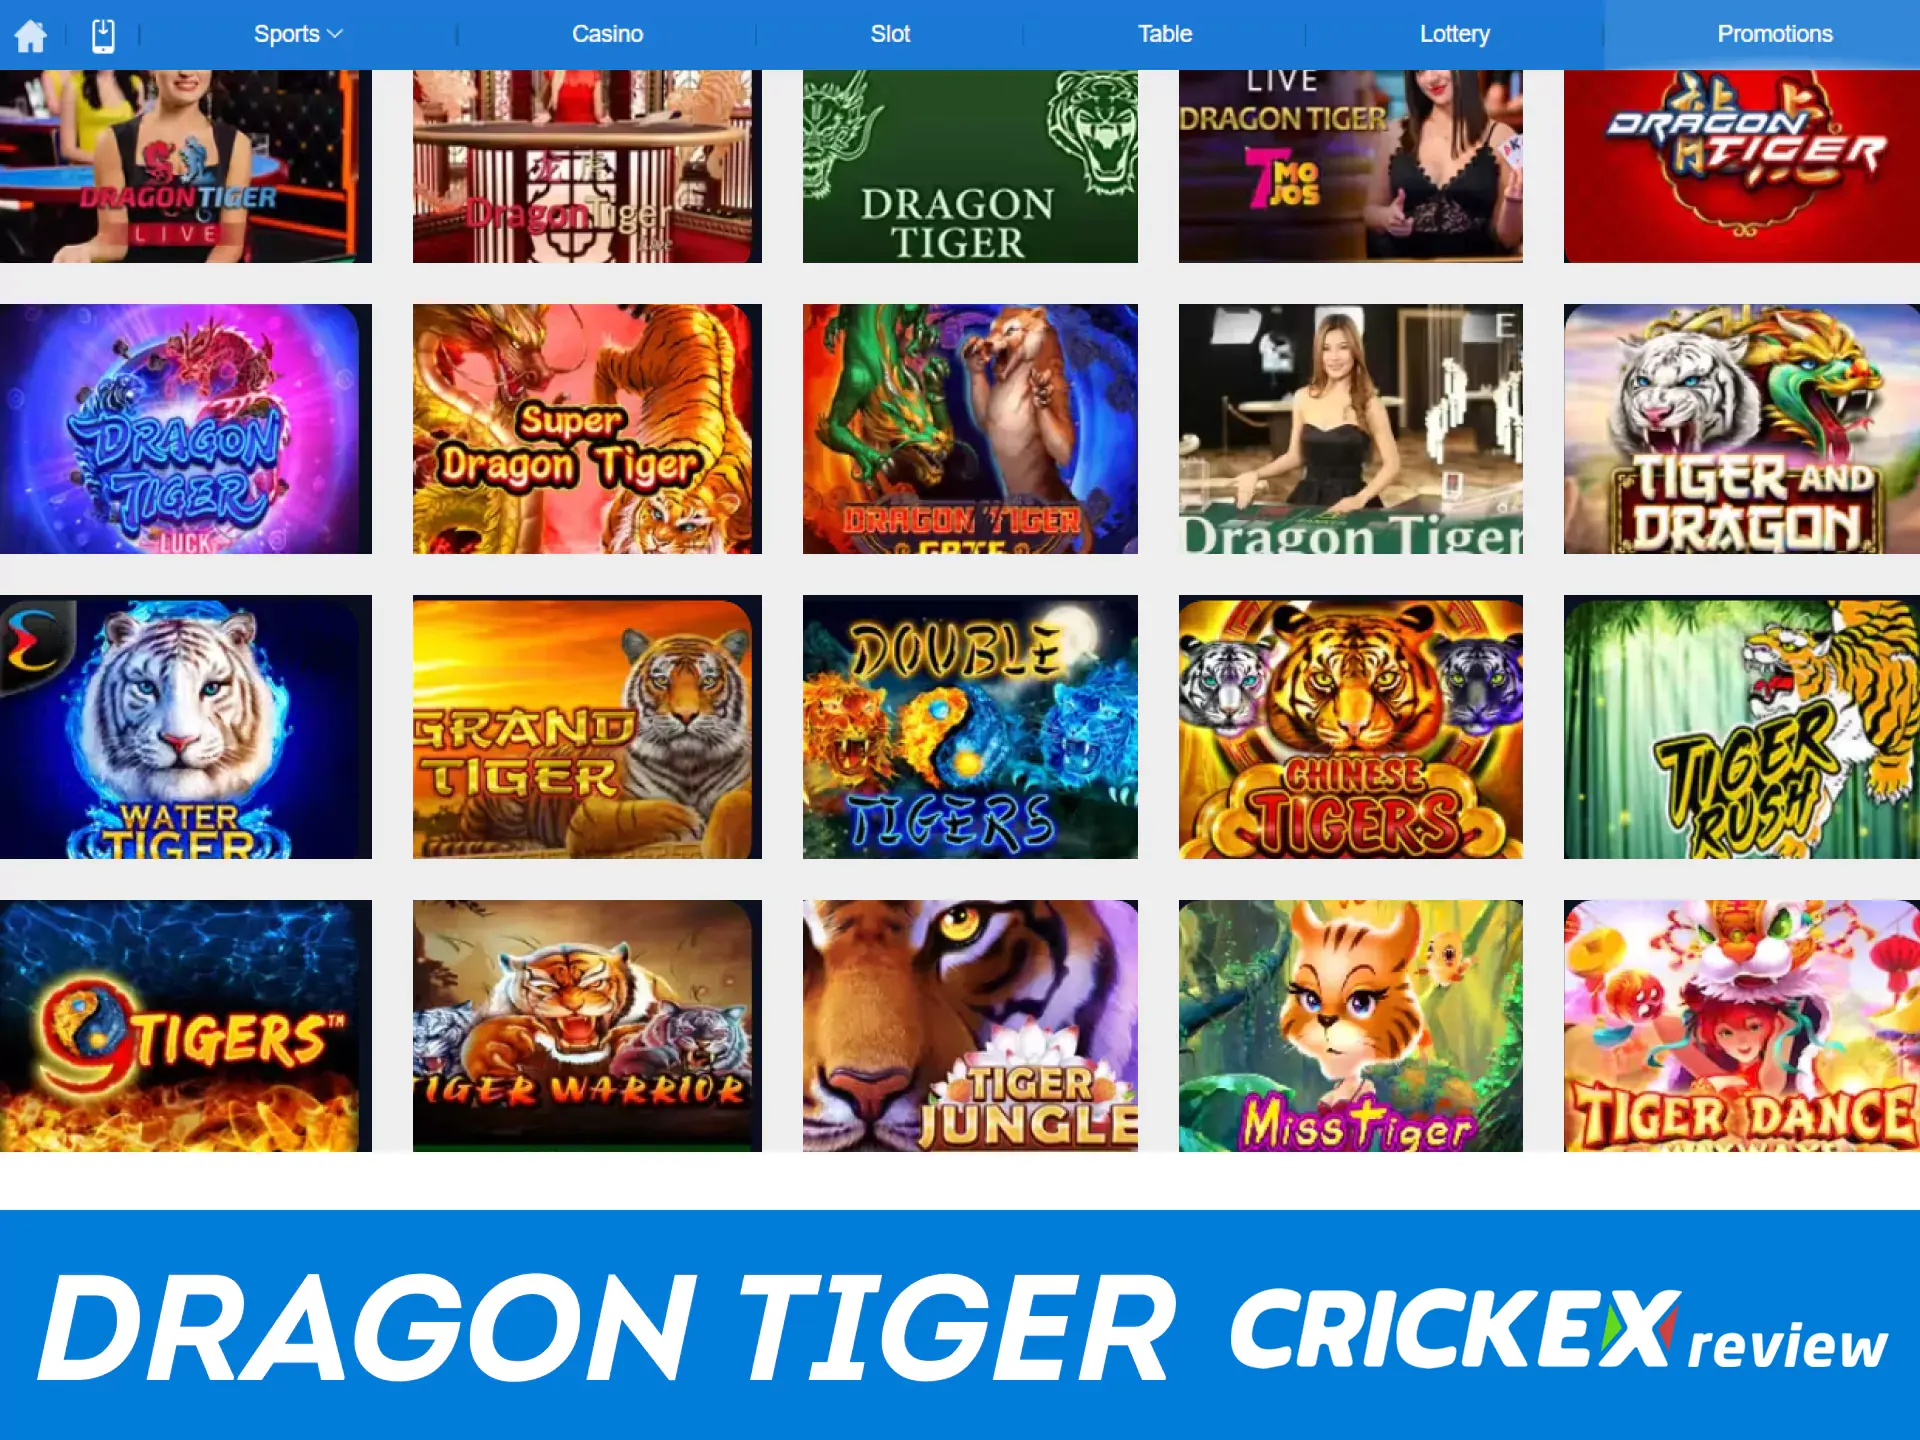 For casino games, choose Dragon Tiger from Crickex.